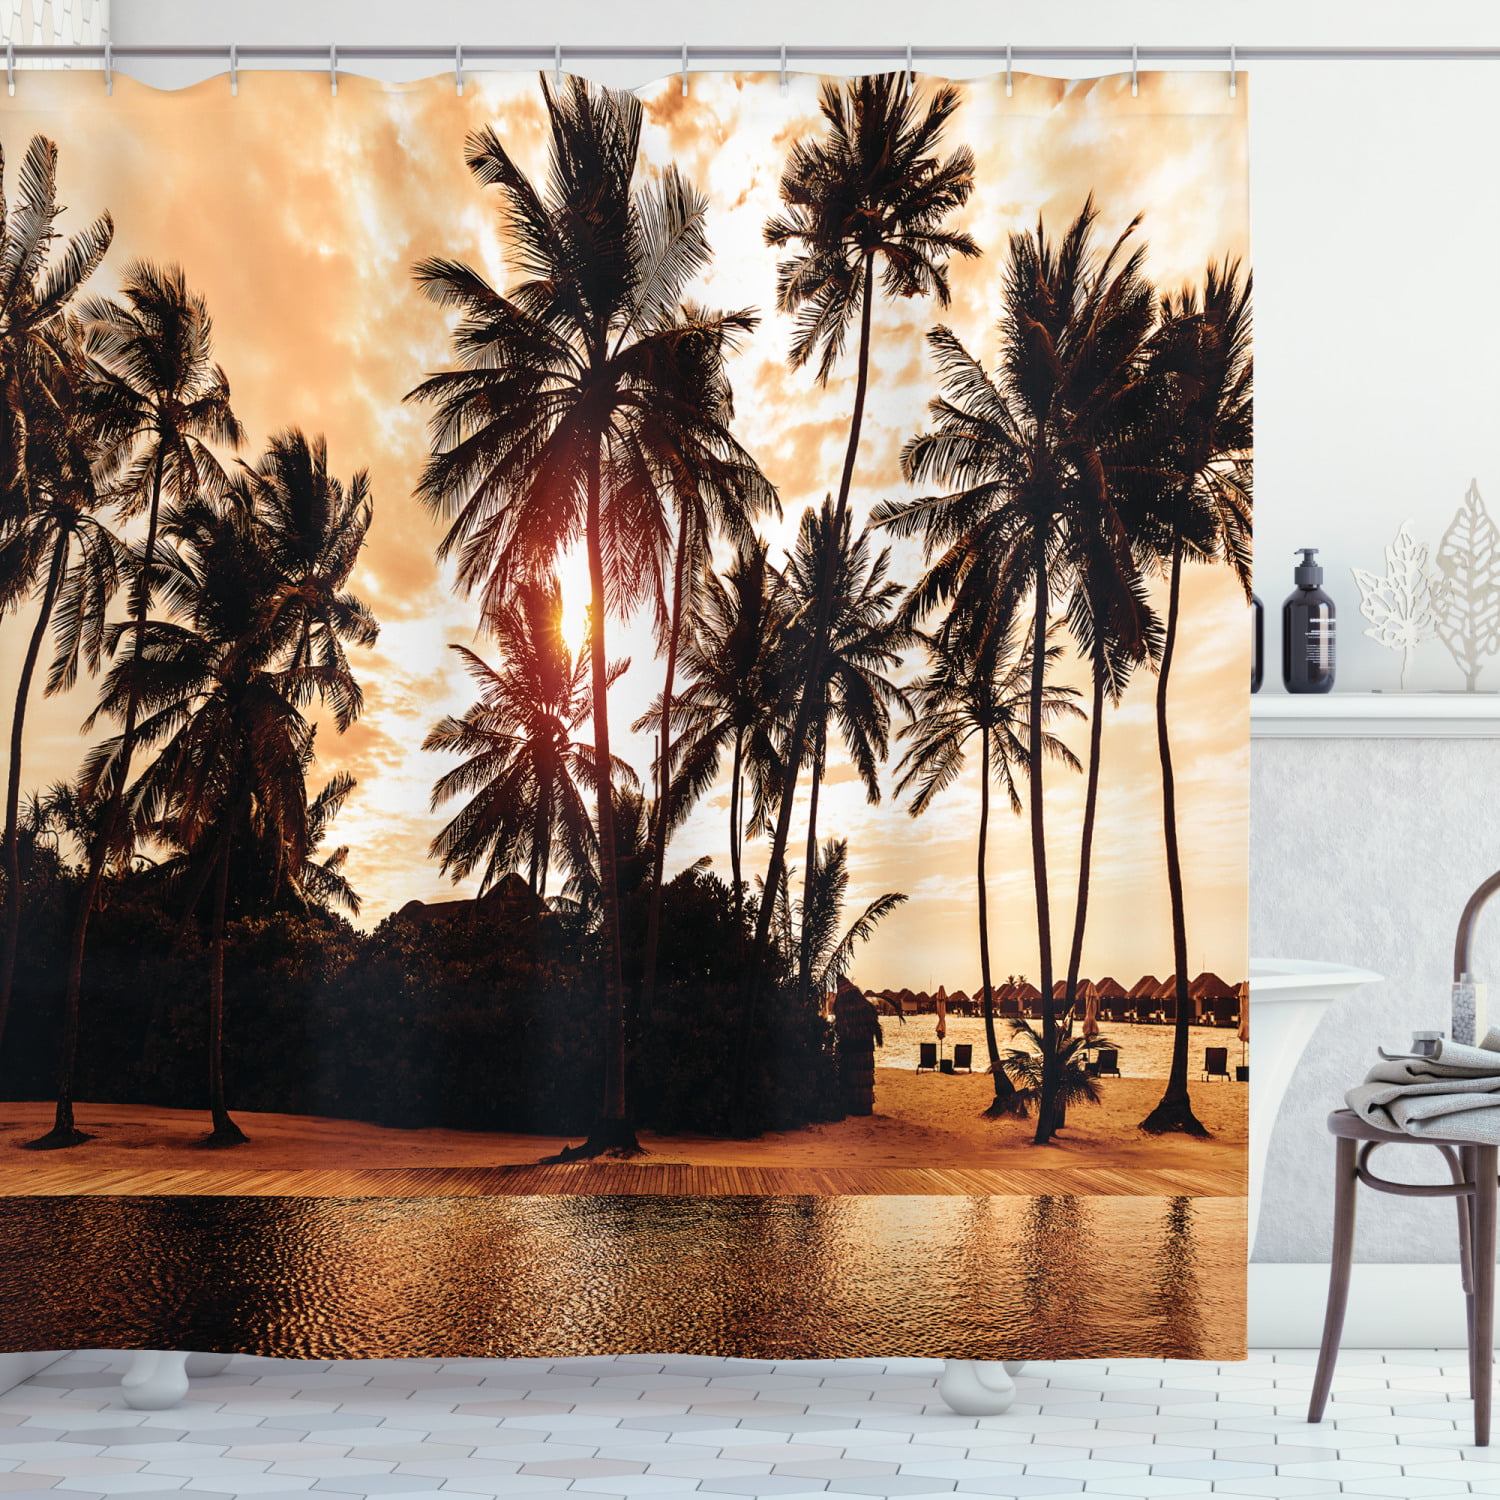 Details about   Sunset Ocean Beach Seaside Palm Trees Shower Curtain Bathroom Waterproof Fabric 